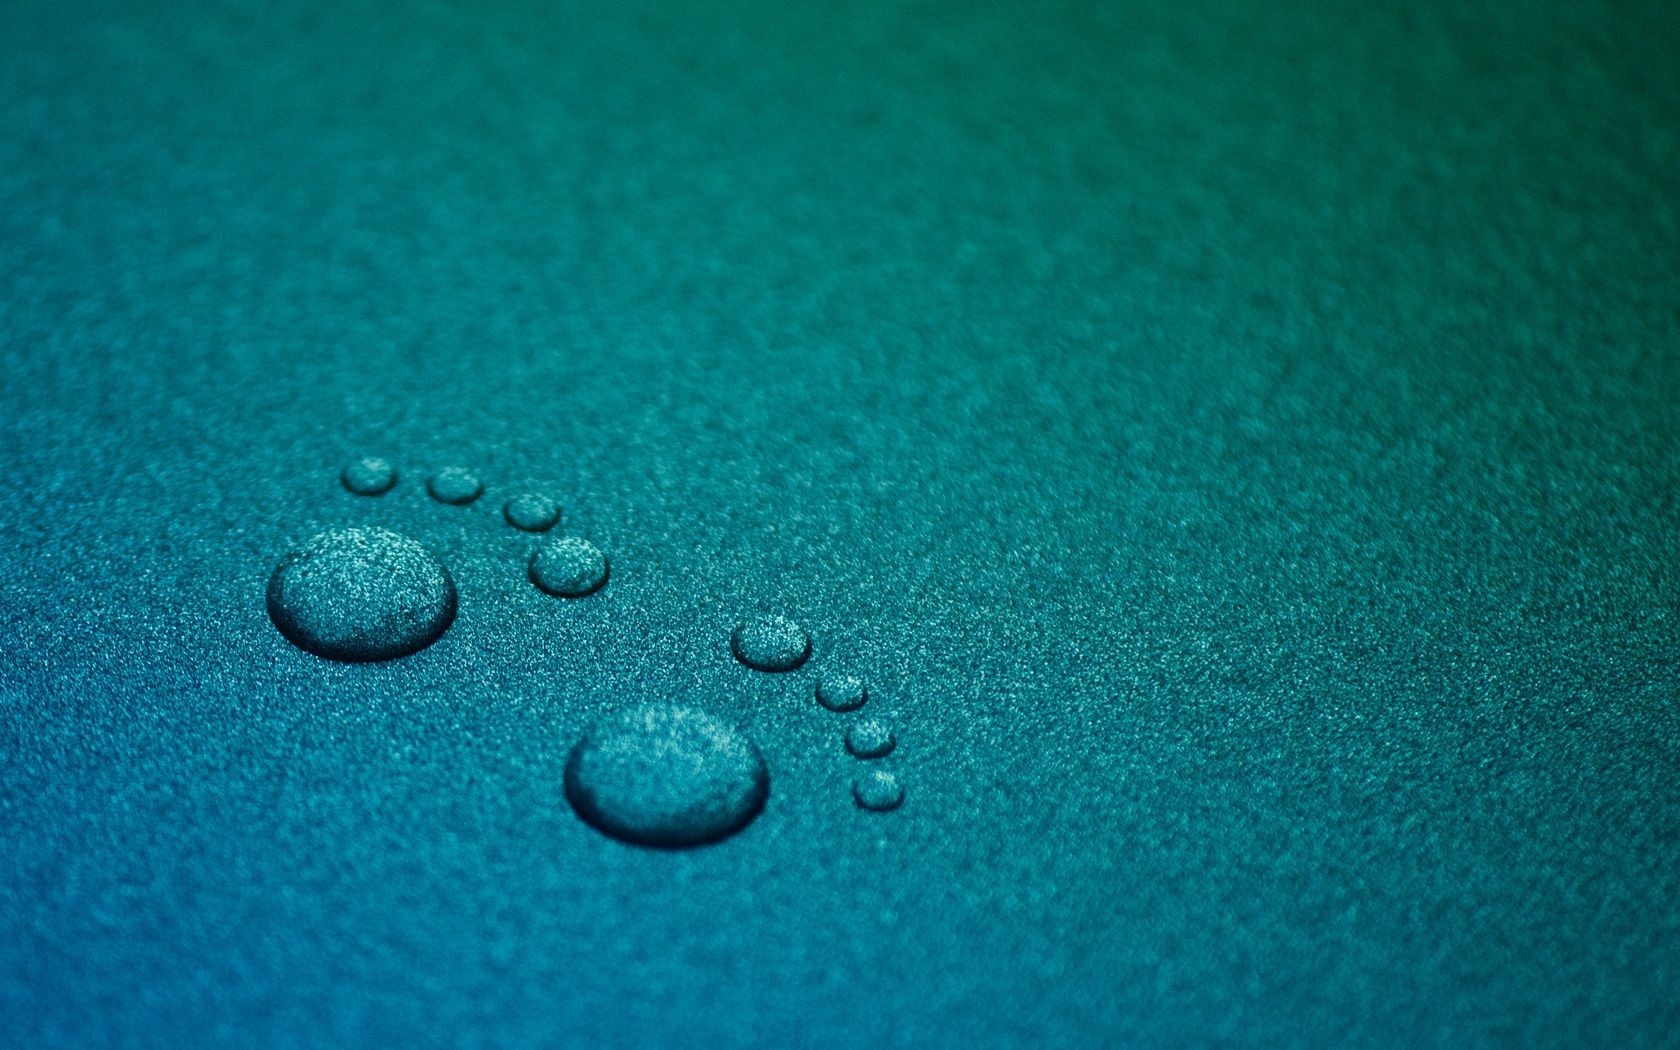 items desktop rain drop texture dew droplet abstract close-up color wet reflection